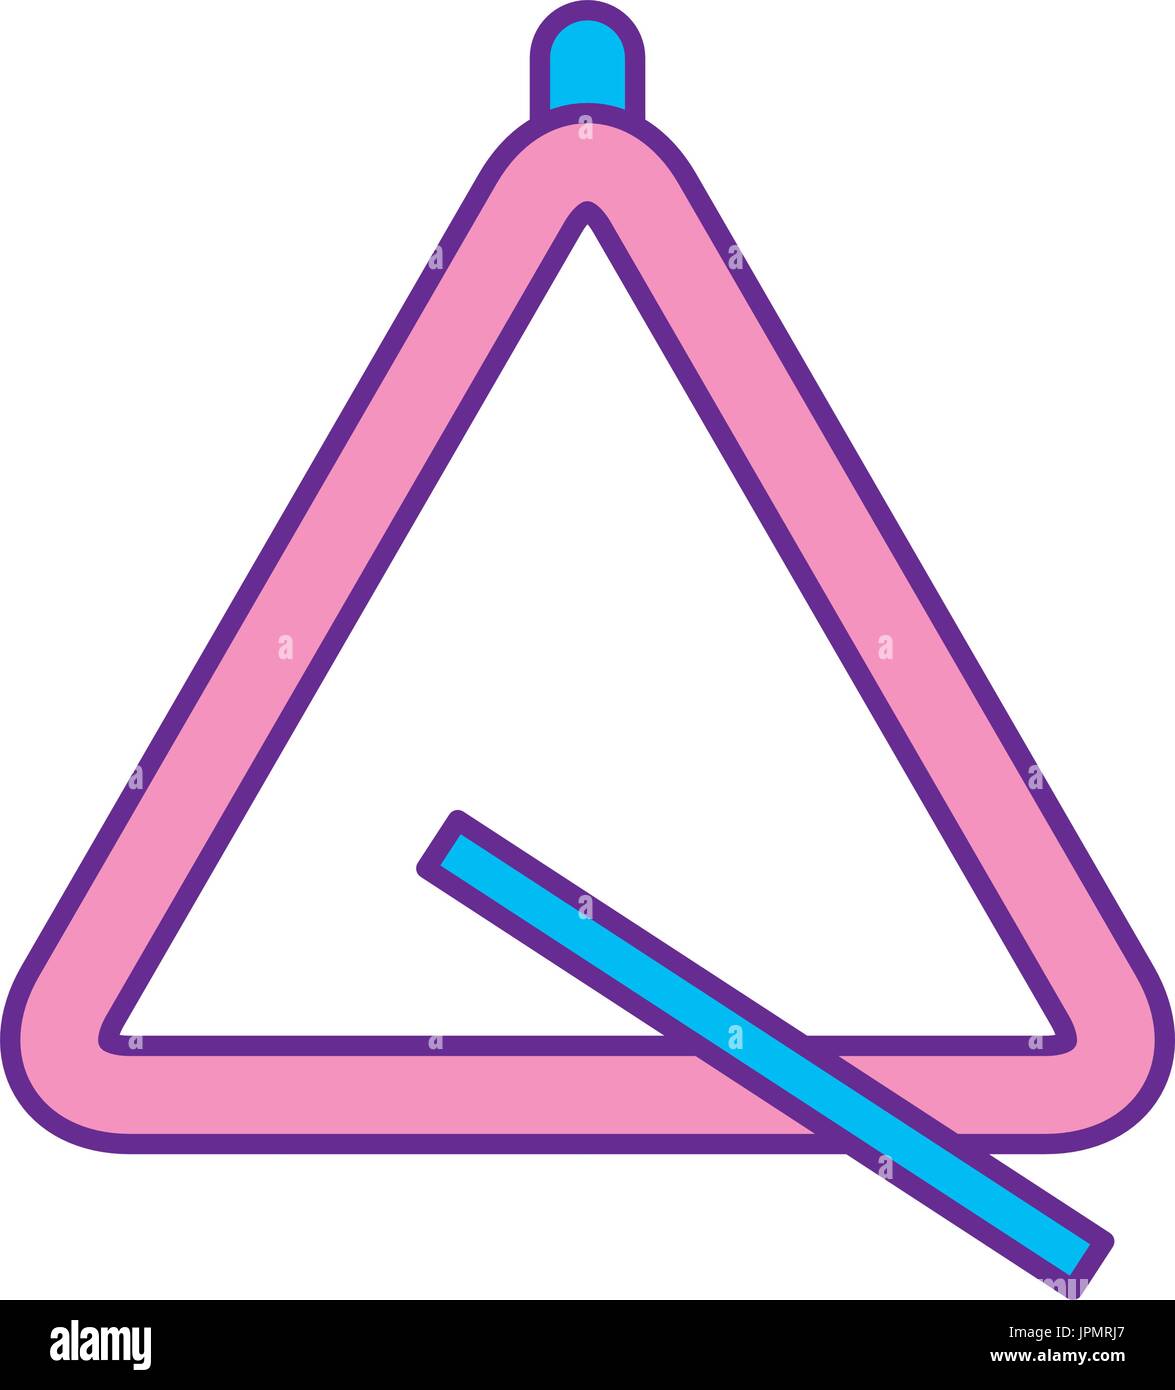 L Icone De Musique Instrument Triangle Image Vectorielle Stock Alamy